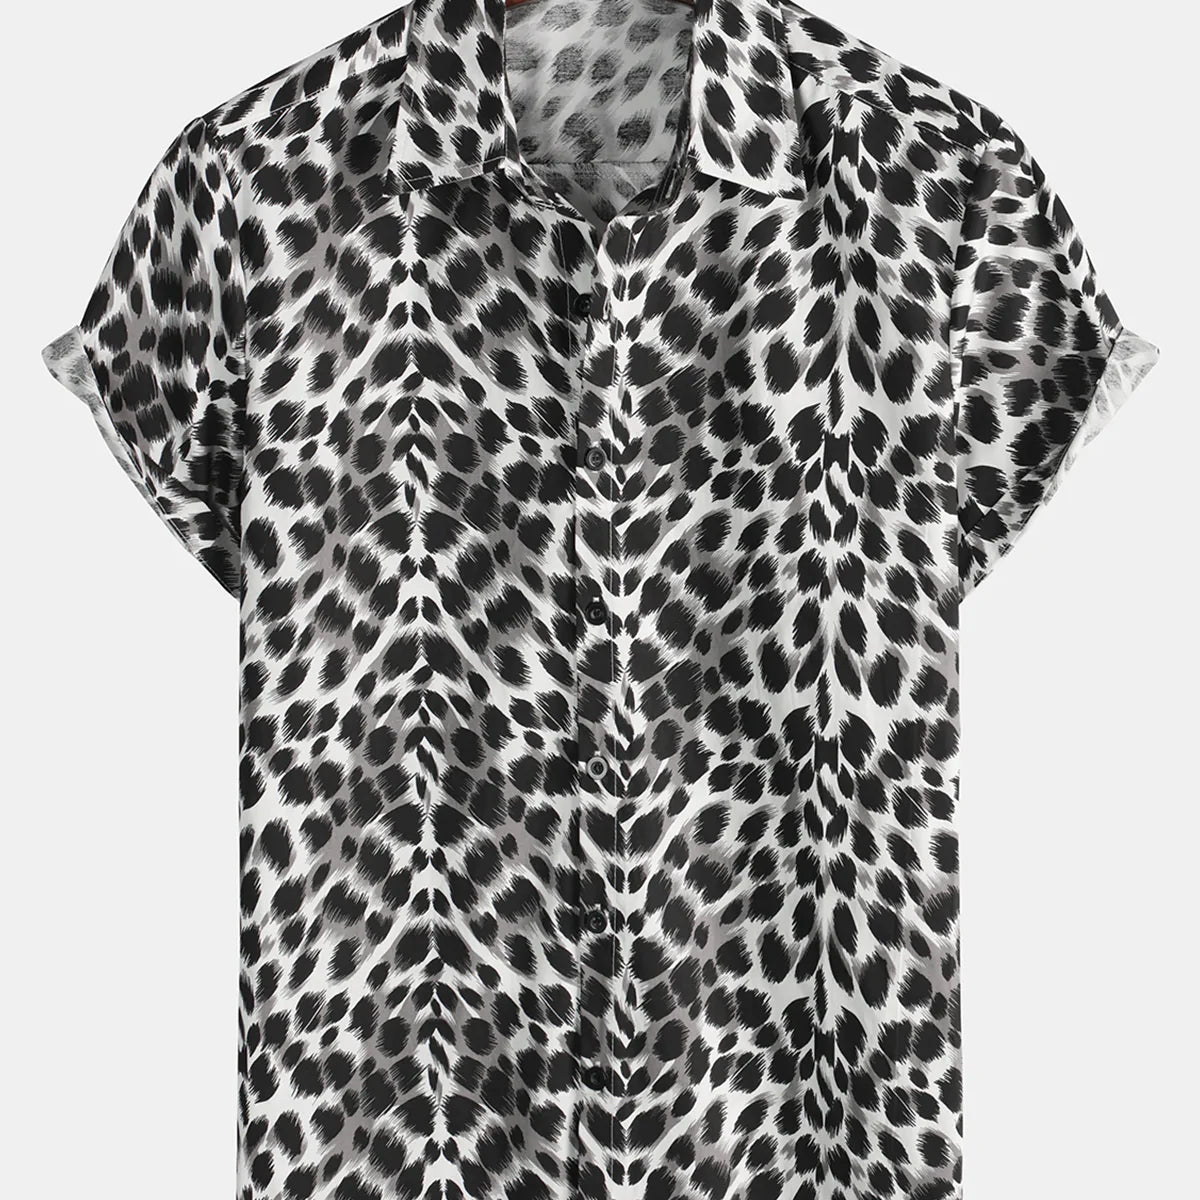 Men's Snow leopard Animal Print Button Up Cotton Breathable Summer Short Sleeve Cool Black Cheetah Shirt